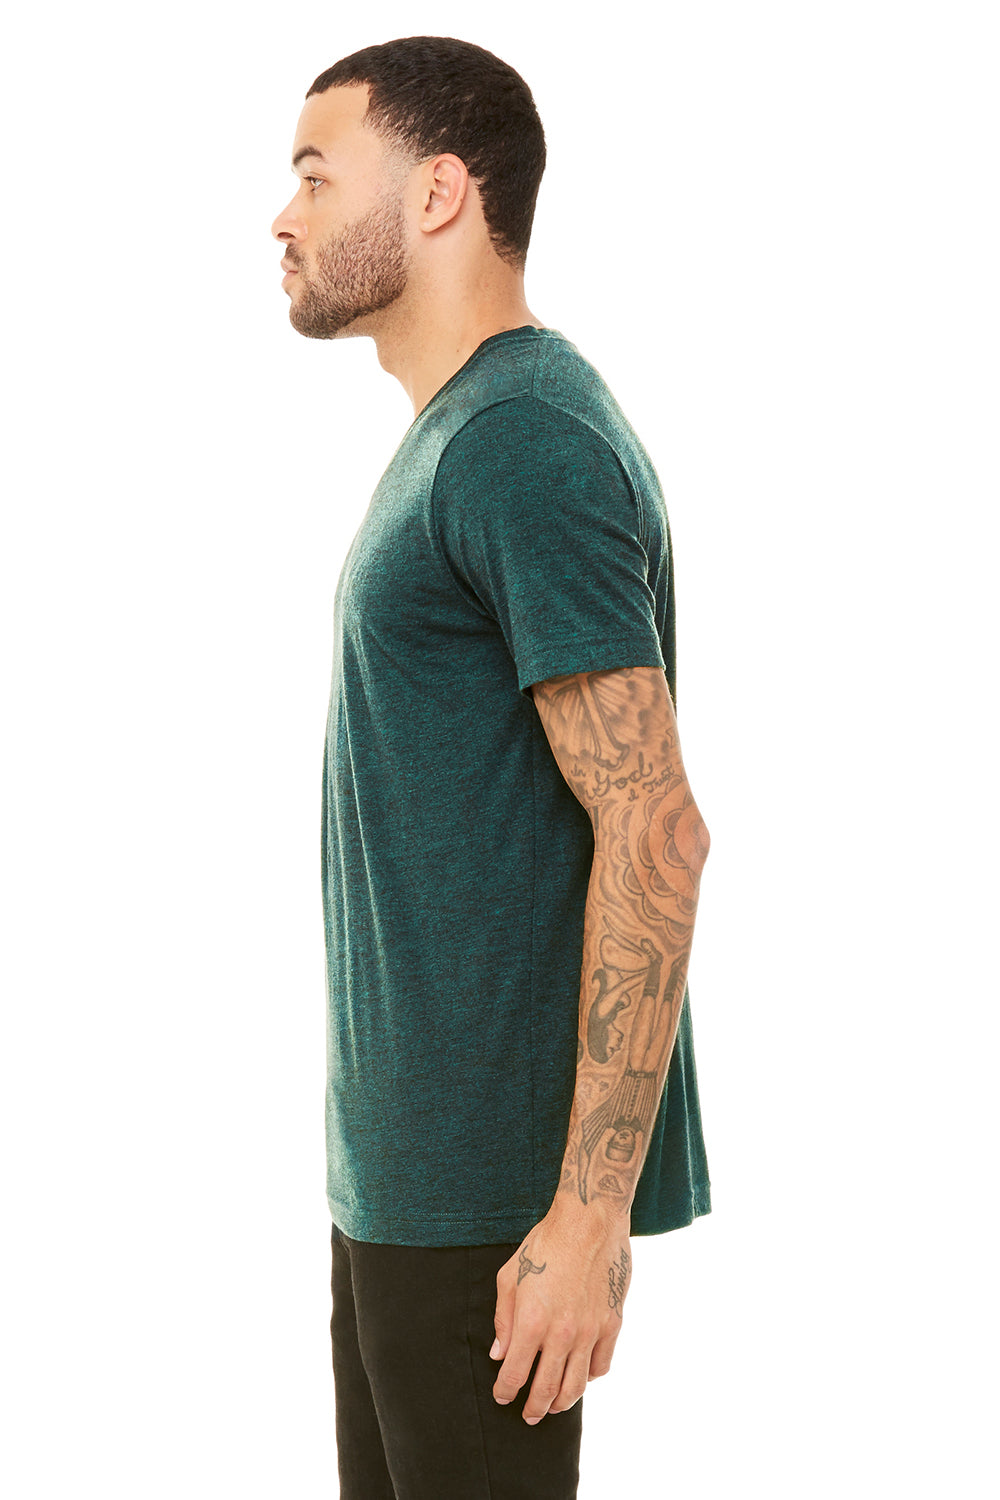 Bella + Canvas 3415C Mens Short Sleeve V-Neck T-Shirt Emerald Green Side